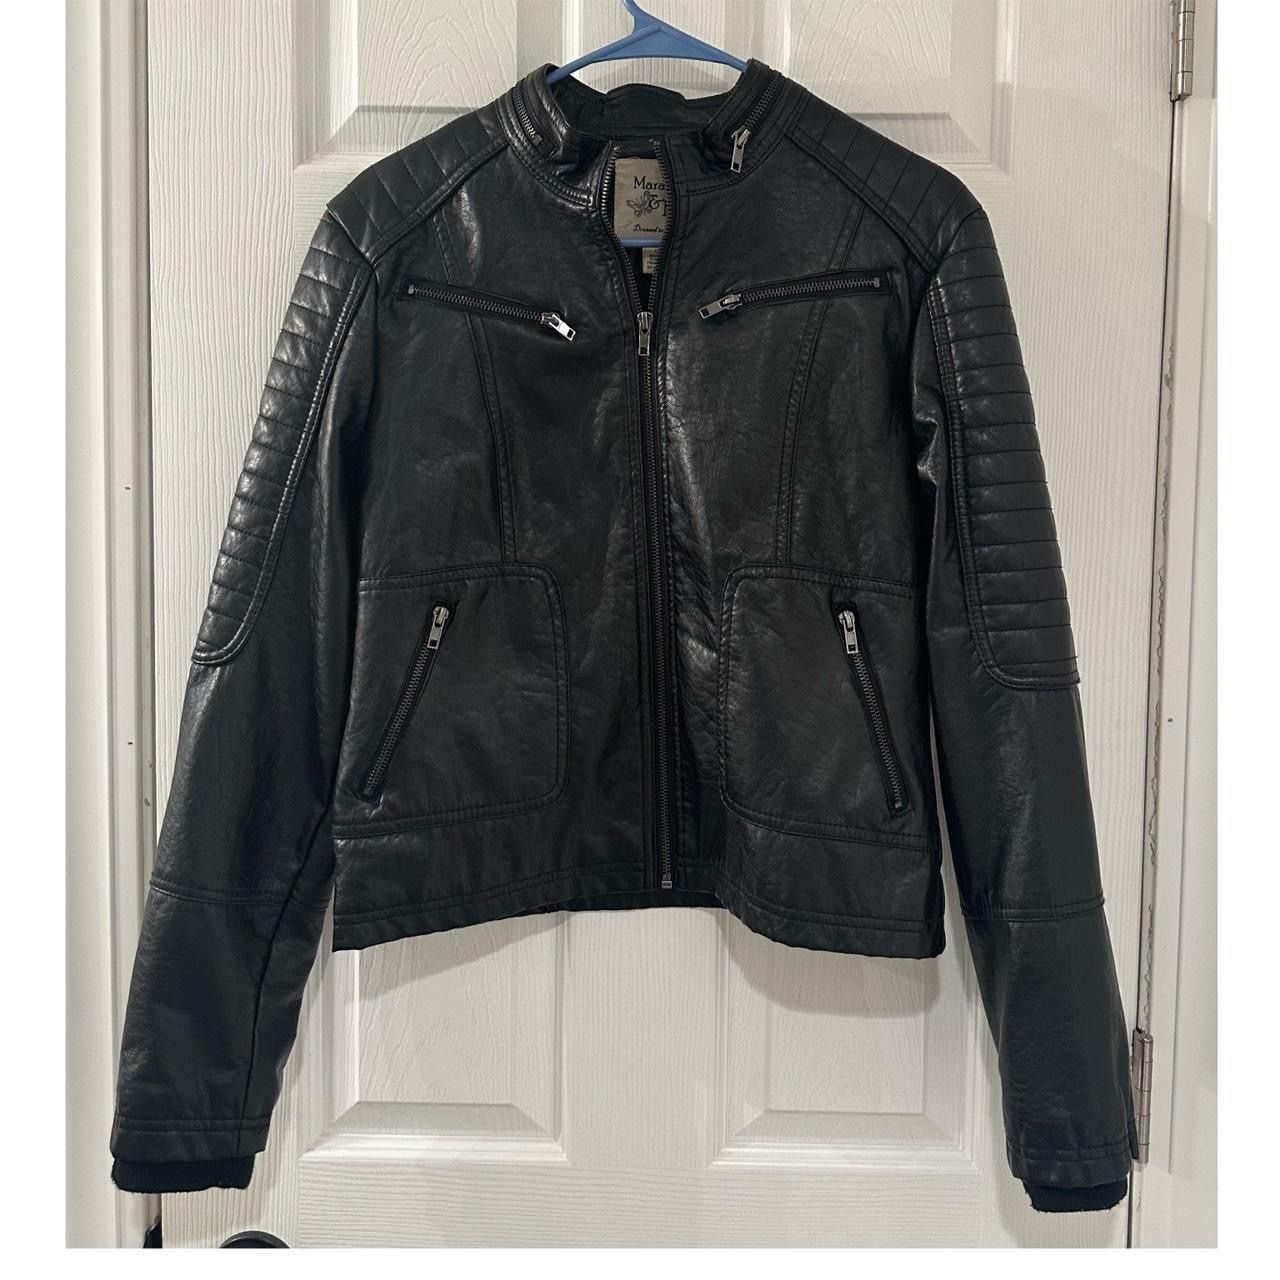 Madalyn & Me - Dressed to Impress leather jacket